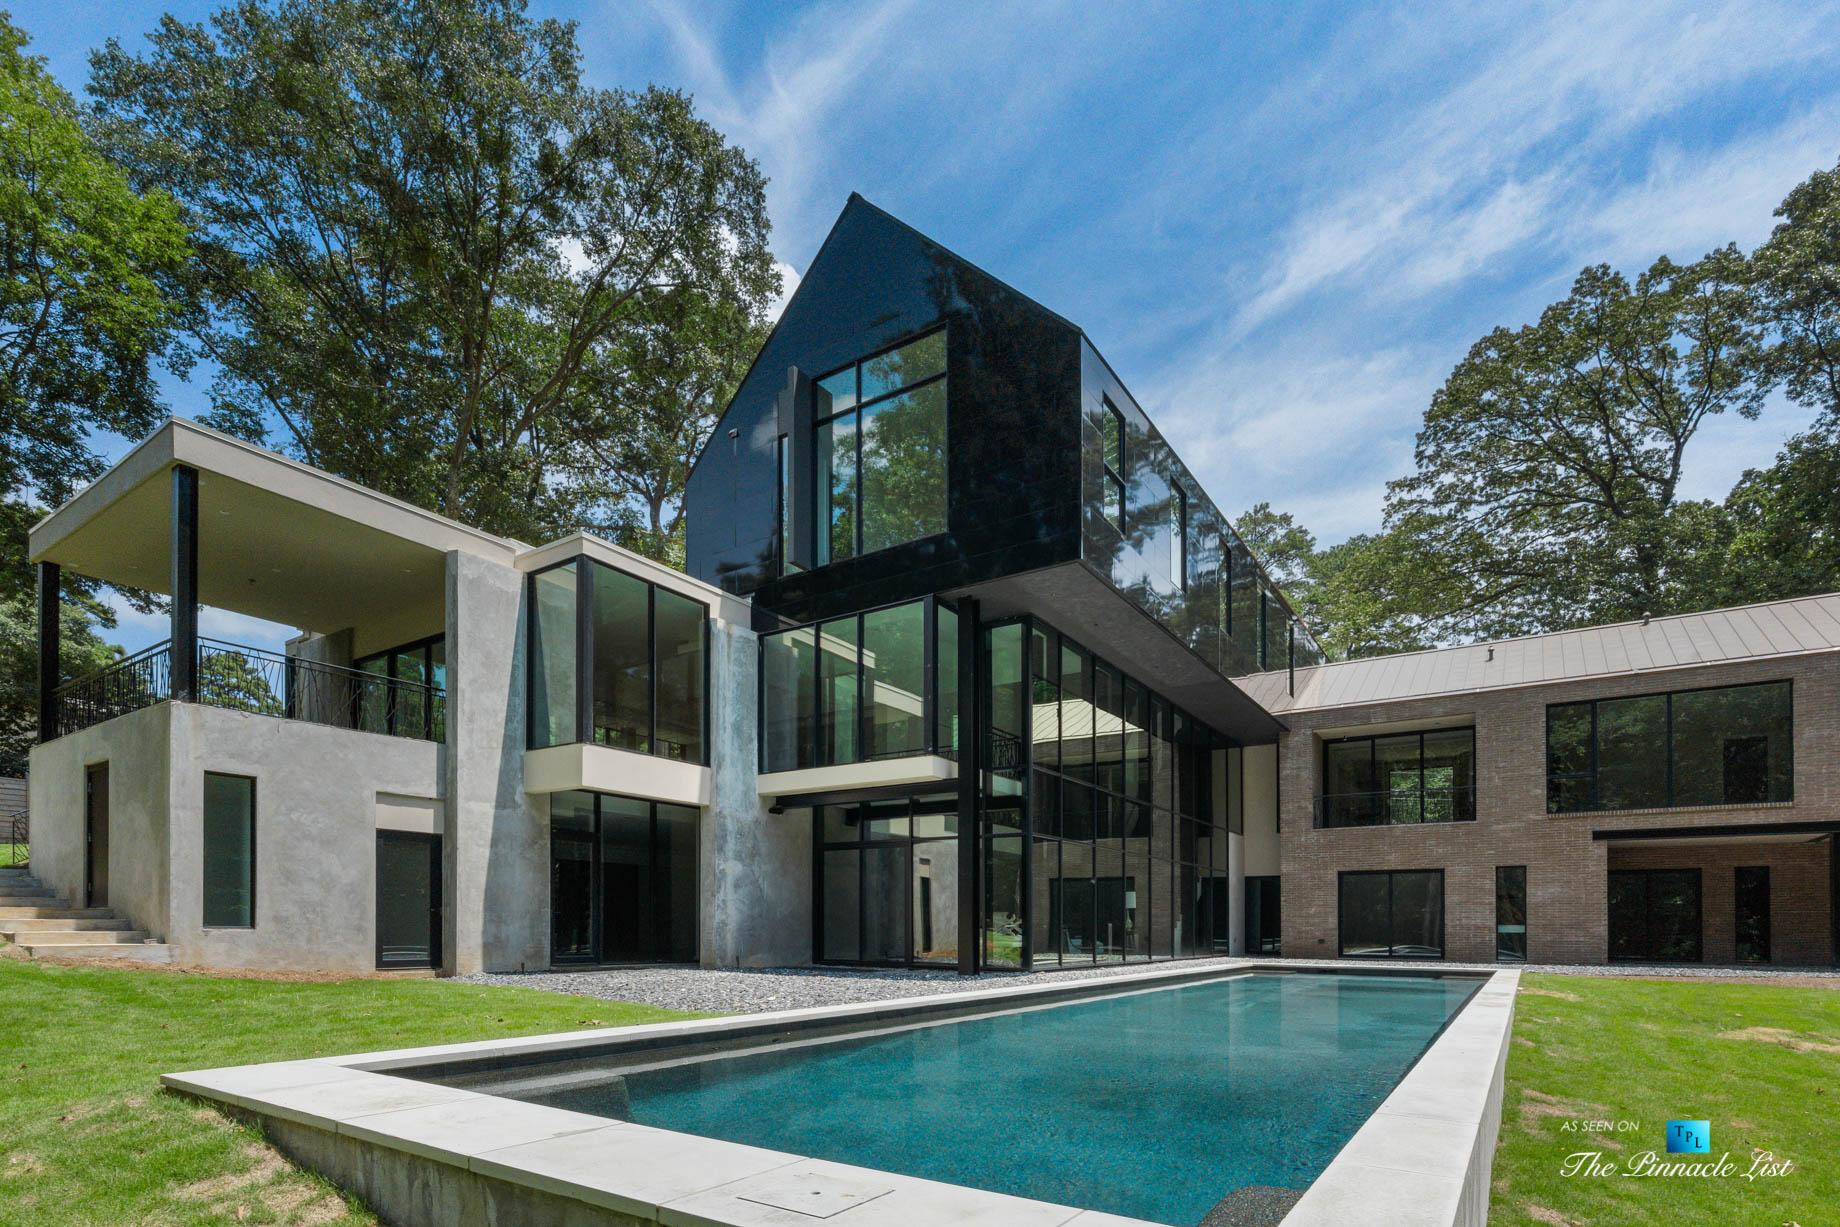 2716 Ridgewood Rd NW, Atlanta, GA, USA - Backyard House Pool View - Luxury Real Estate - Modern Contemporary Buckhead Home